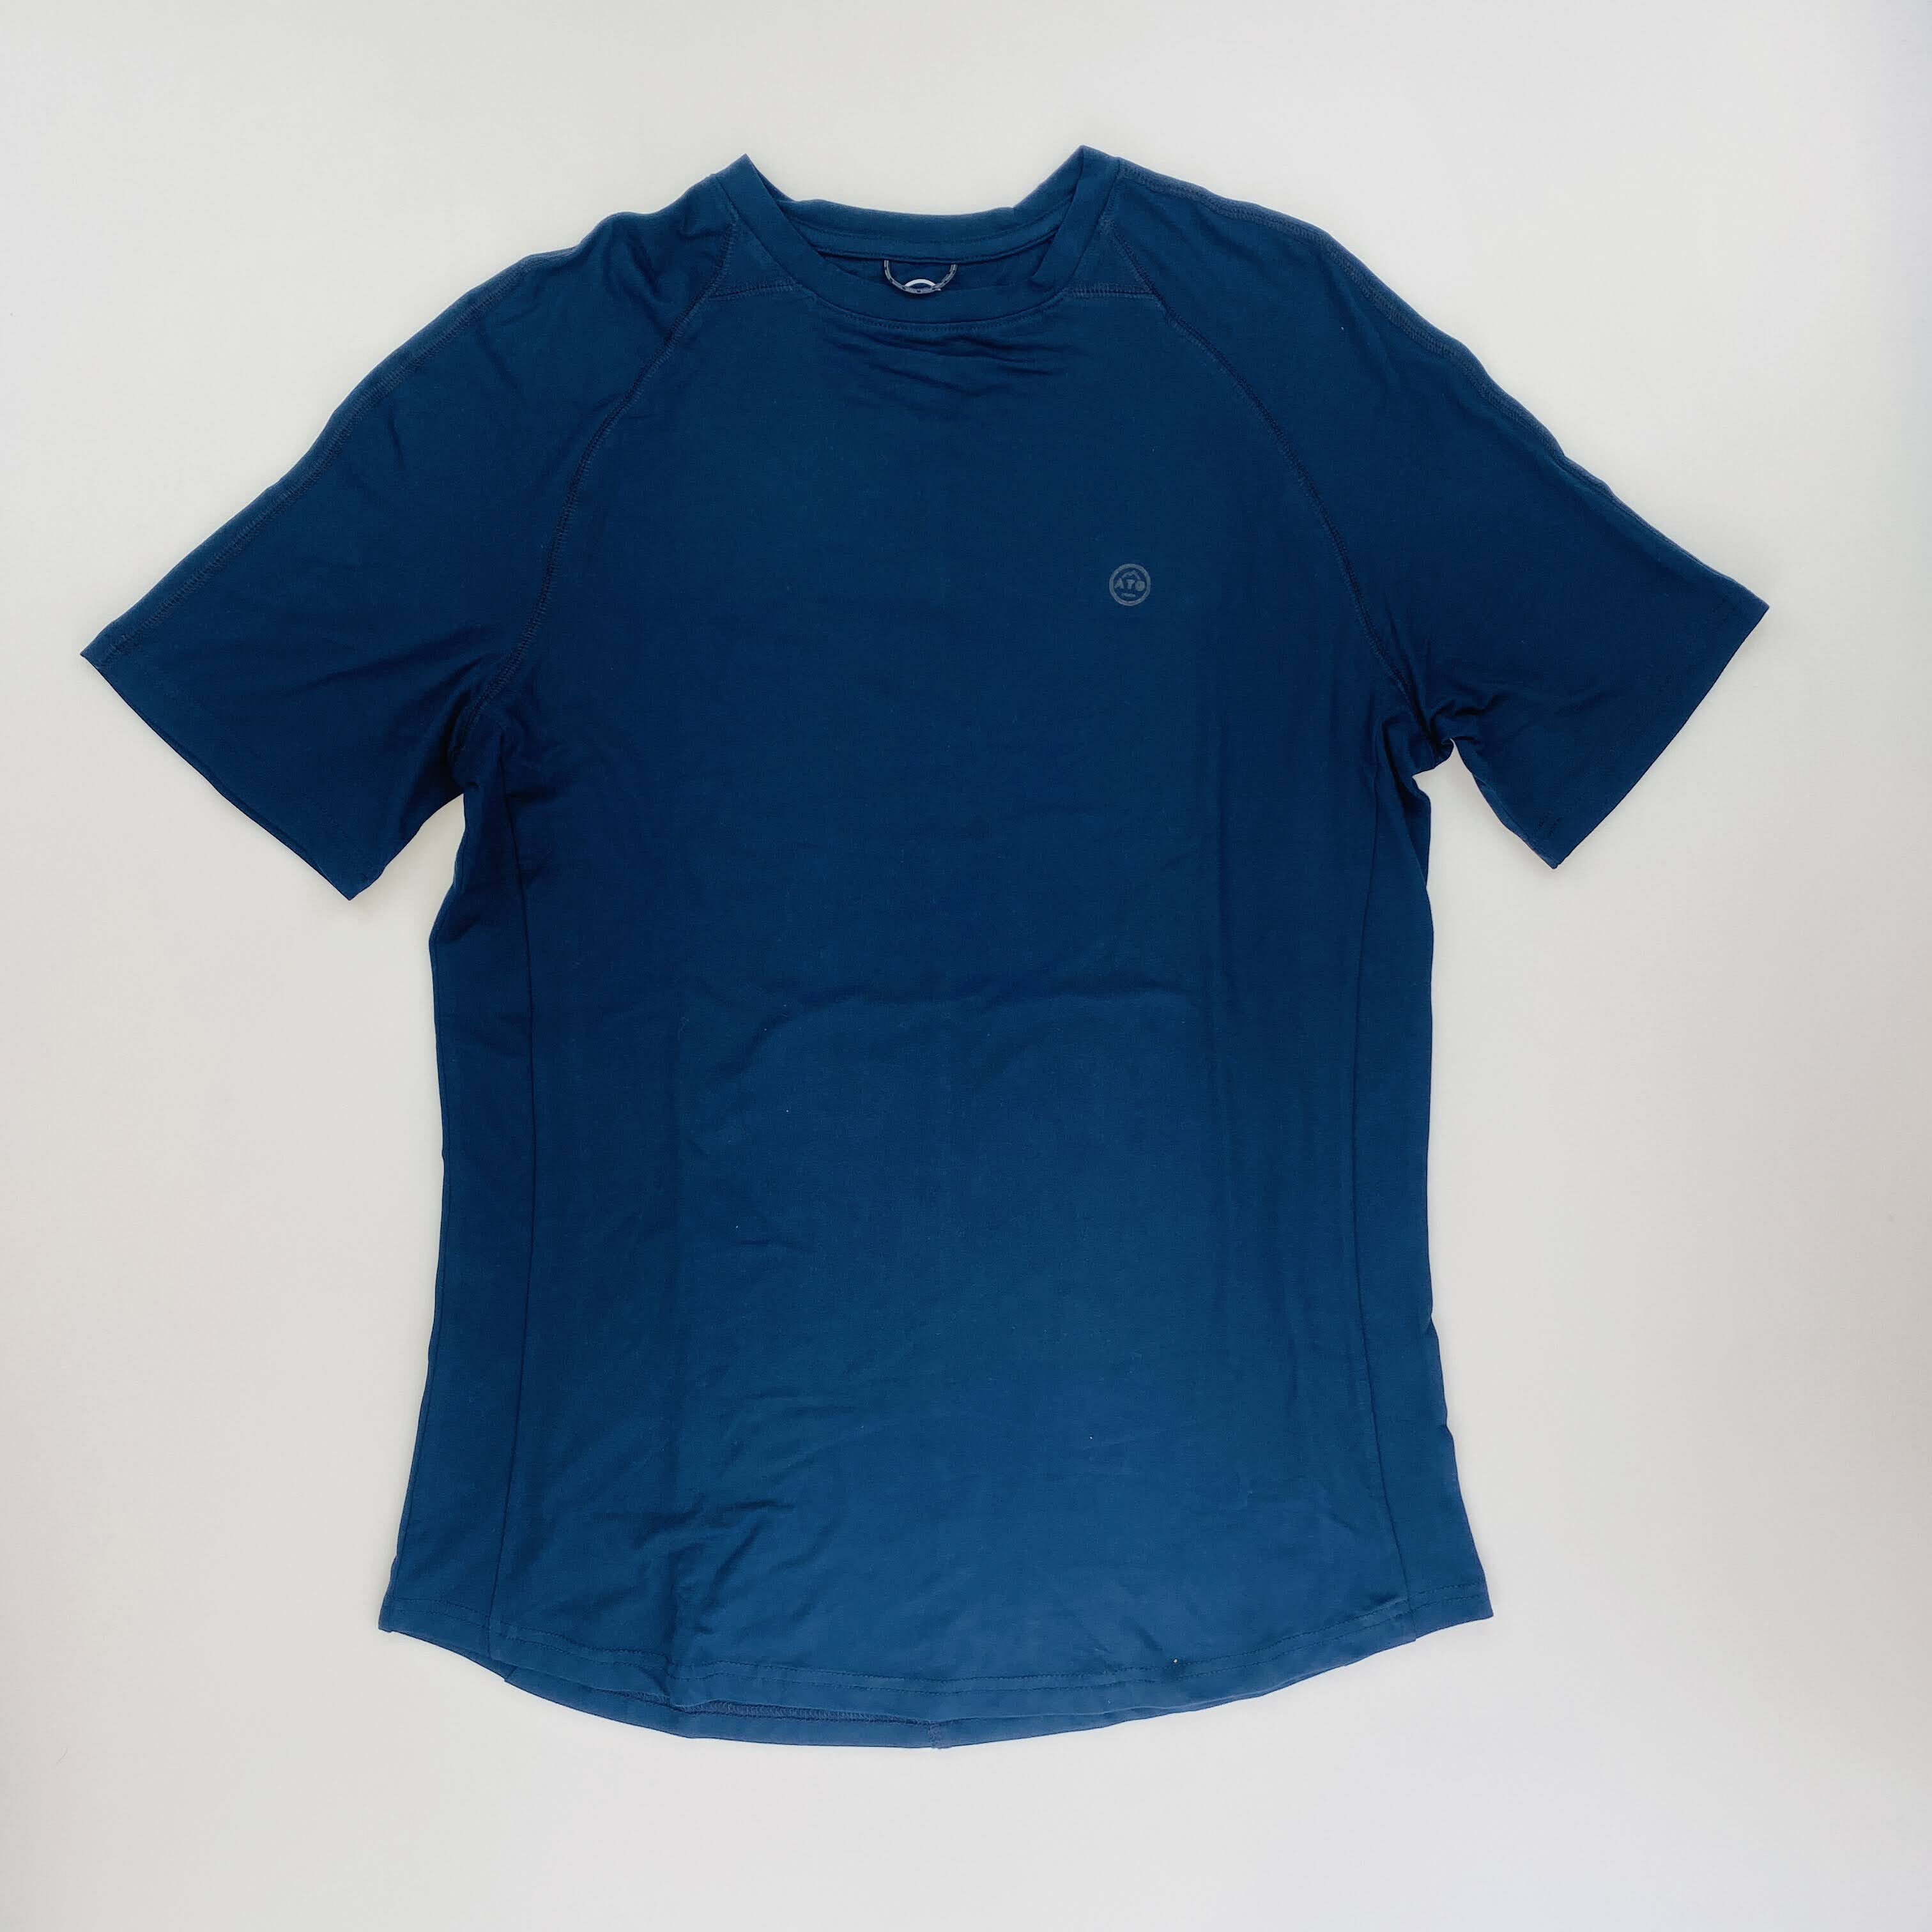 Wrangler Ss Performance T Shirt - T-shirt di seconda mano - Uomo - Blu - M | Hardloop